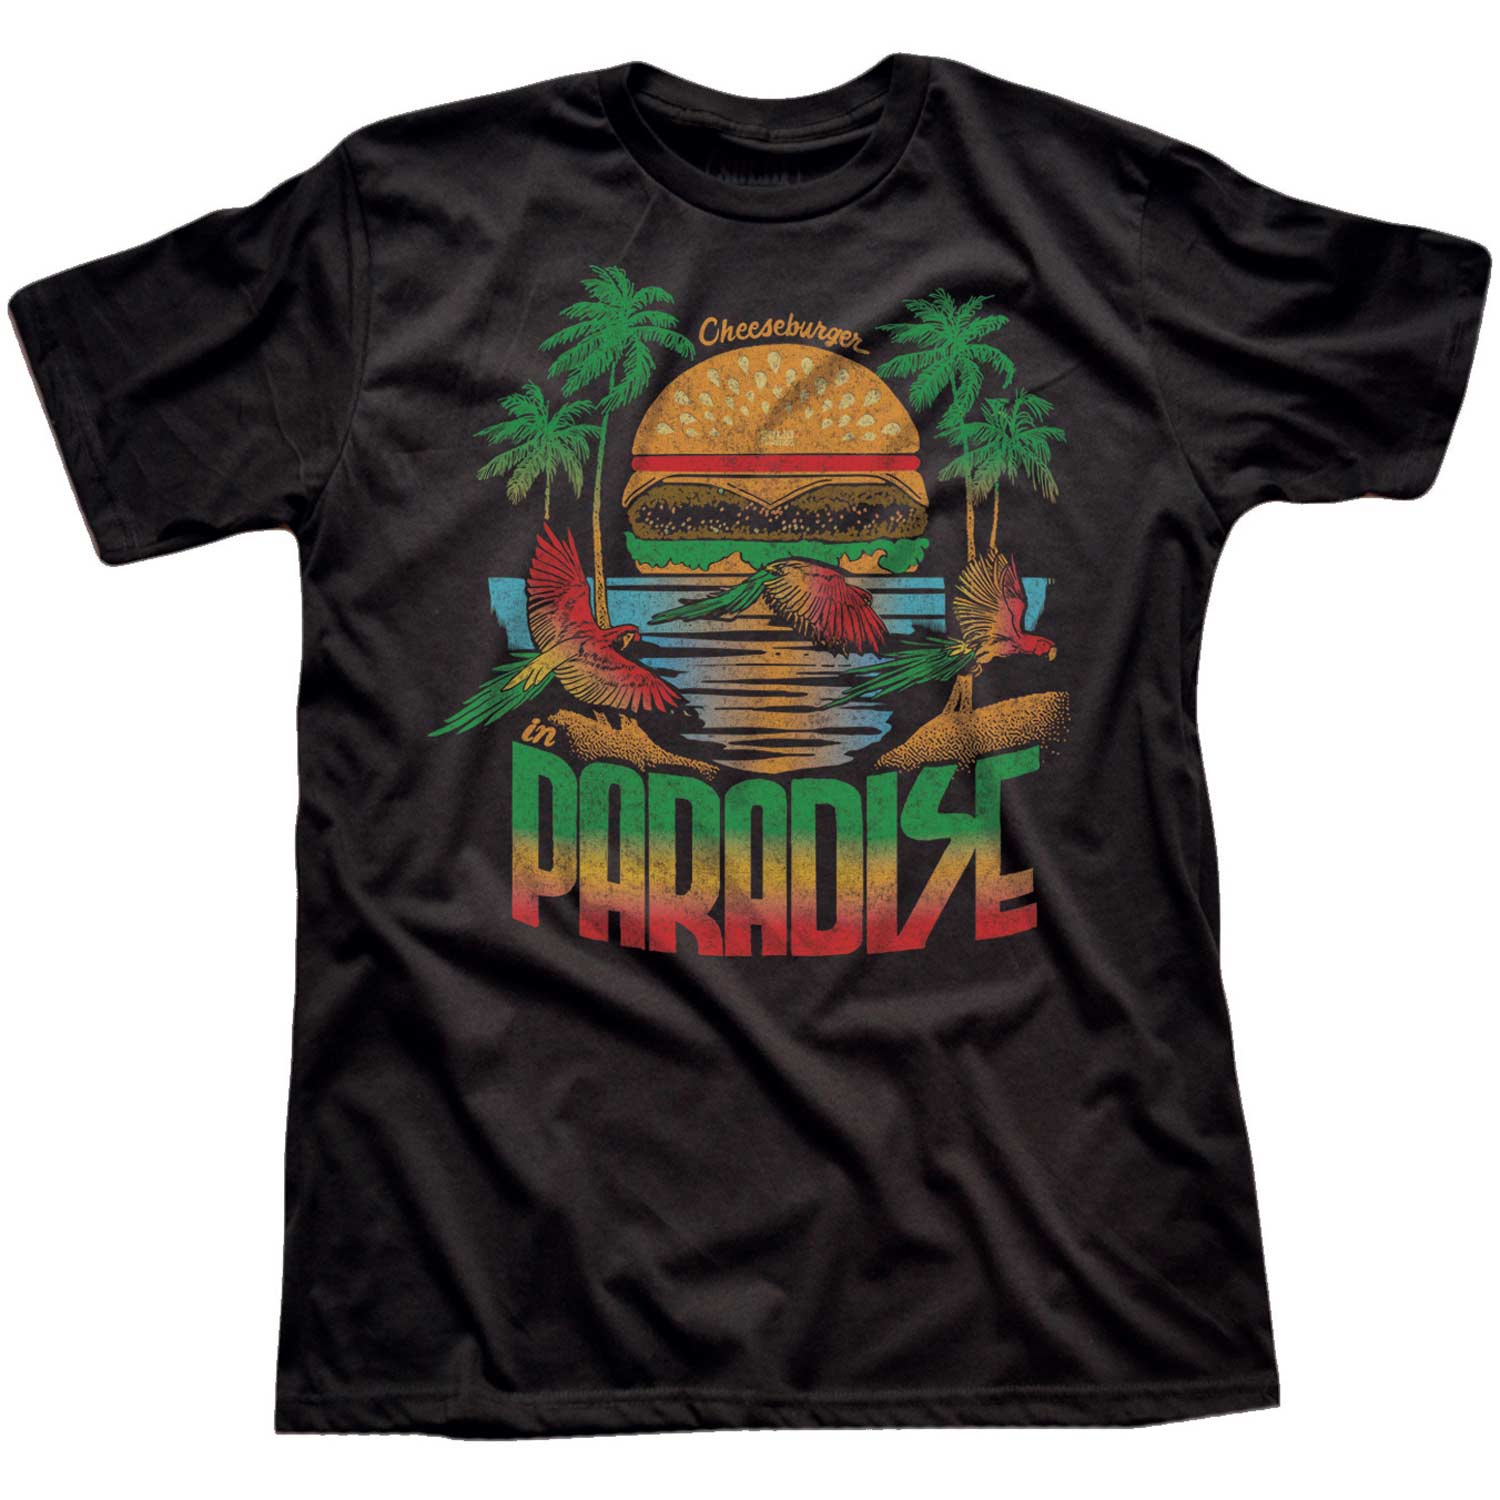 Cheeseburger in Paradise T-shirt